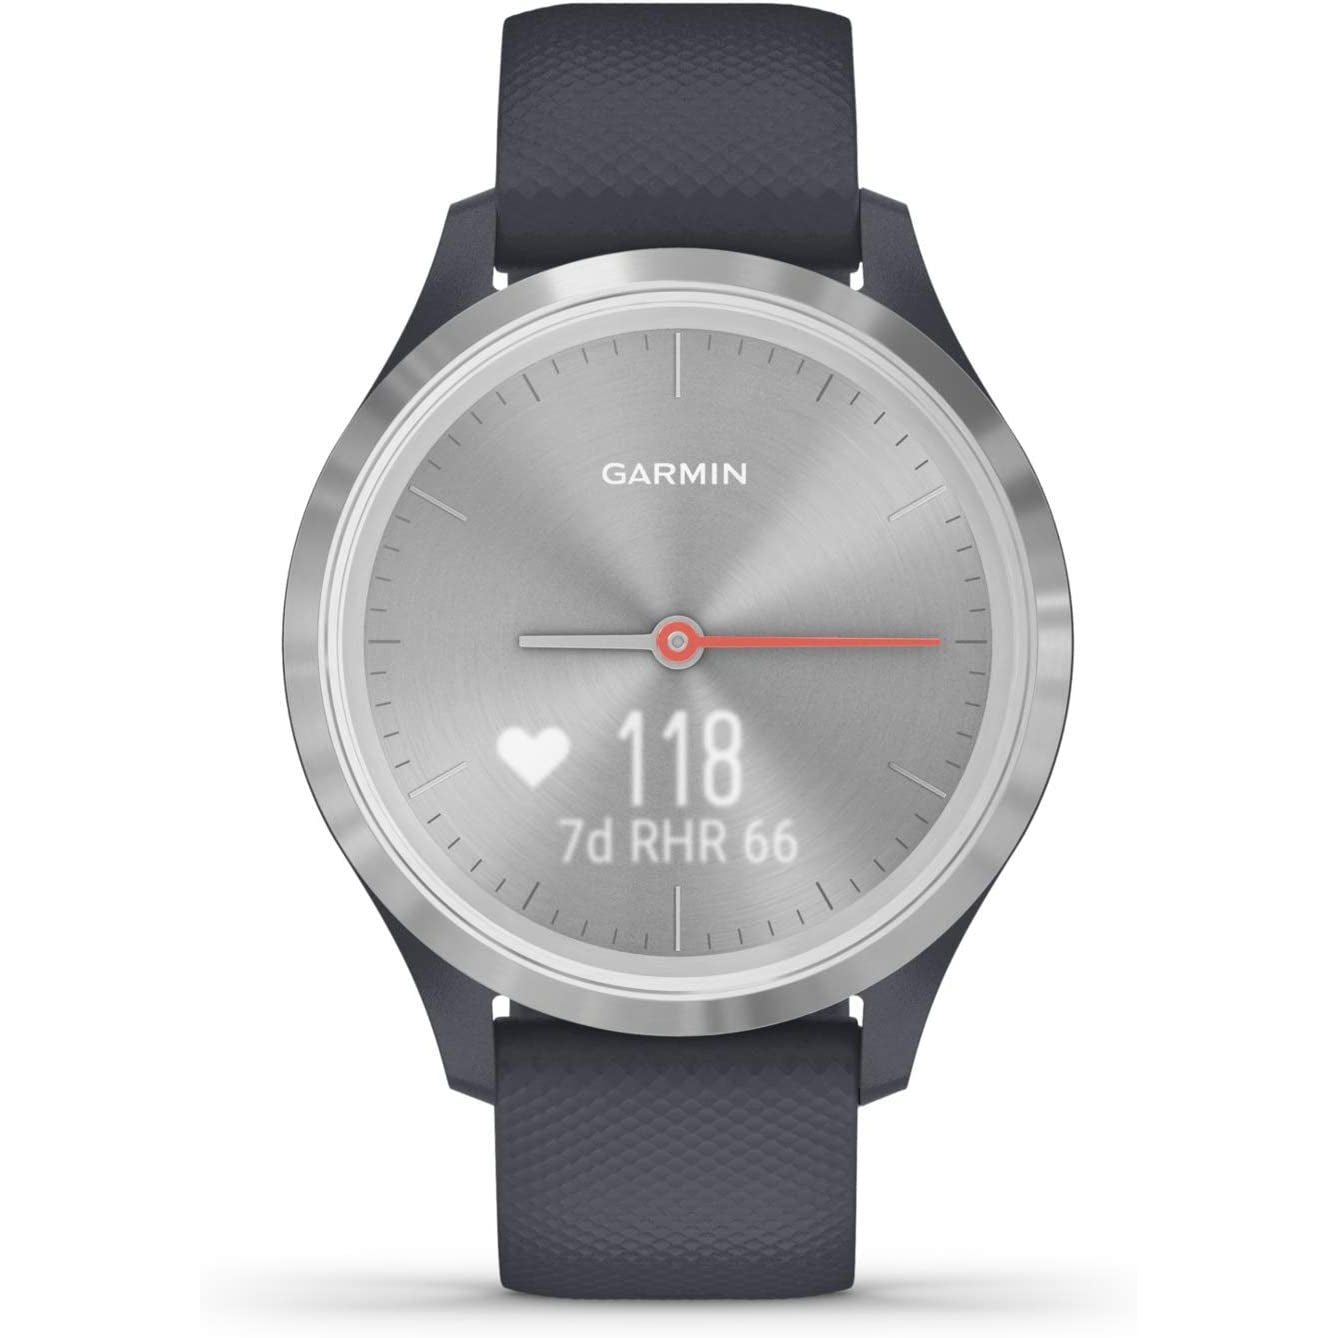 Garmin VivoMove 3S Hybrid Smartwatch - Grey - Refurbished Excellent